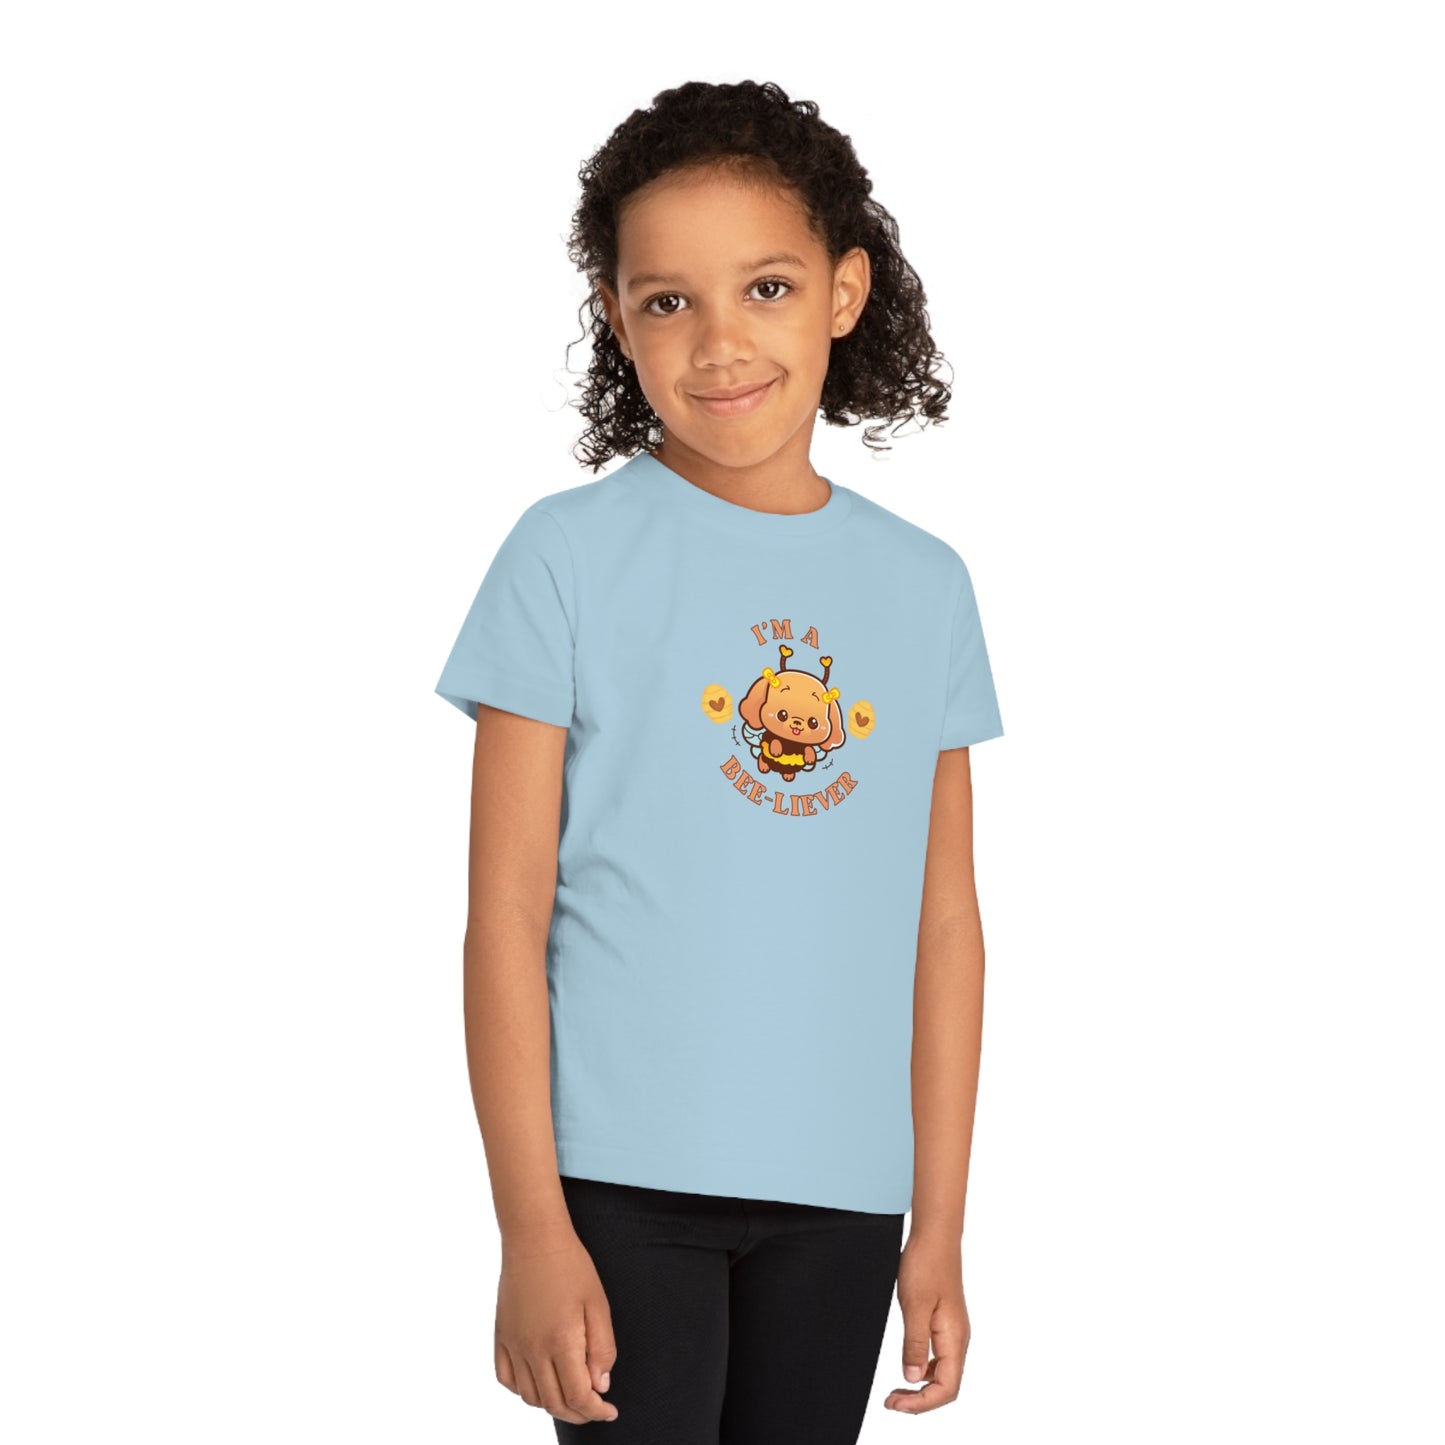 Christian Shirts for Kids, Children's Eco-friendly Christian T-shirt, Kids Natural Faith T-shirt, Toddler & Youth Faith Tee 